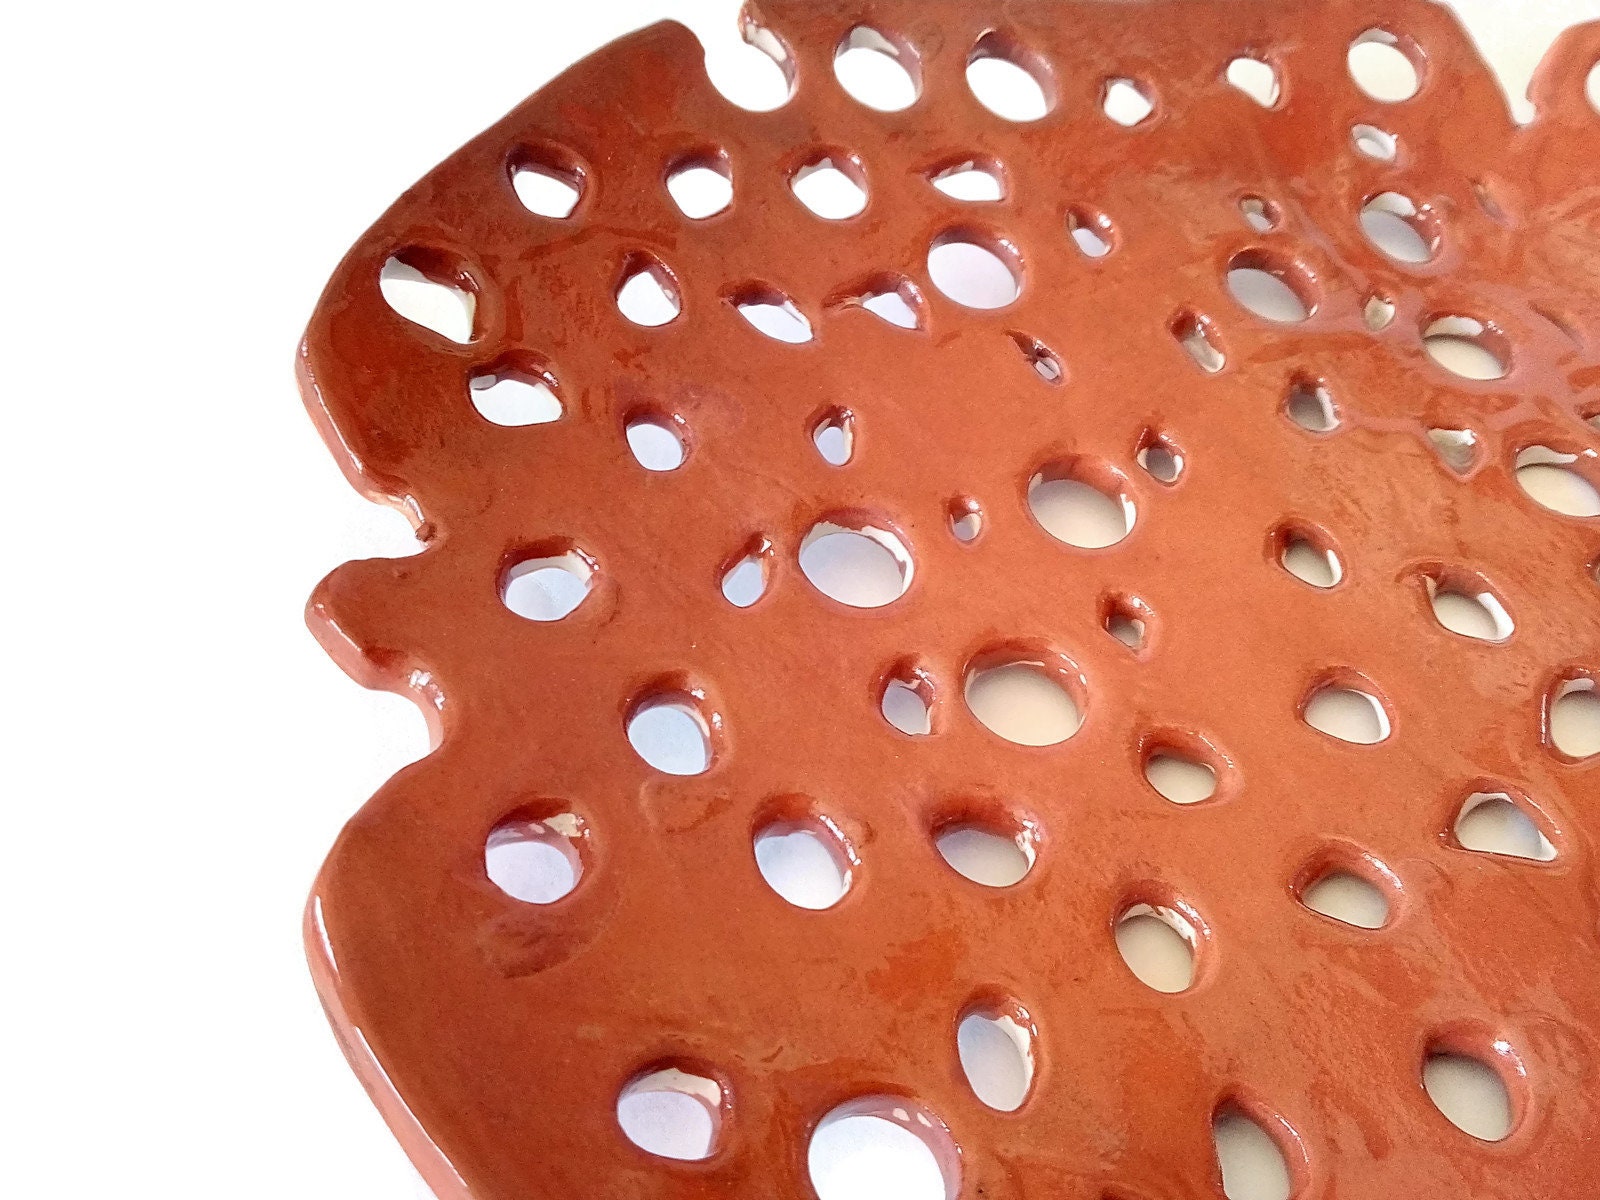 Handmade Ceramic Plate For Wall Decor, Large Centerpiece Fruit Bowl With Holes, Handbuilt Kitchen And Dining Decorative Modern Organic Shape - Ceramica Ana Rafael